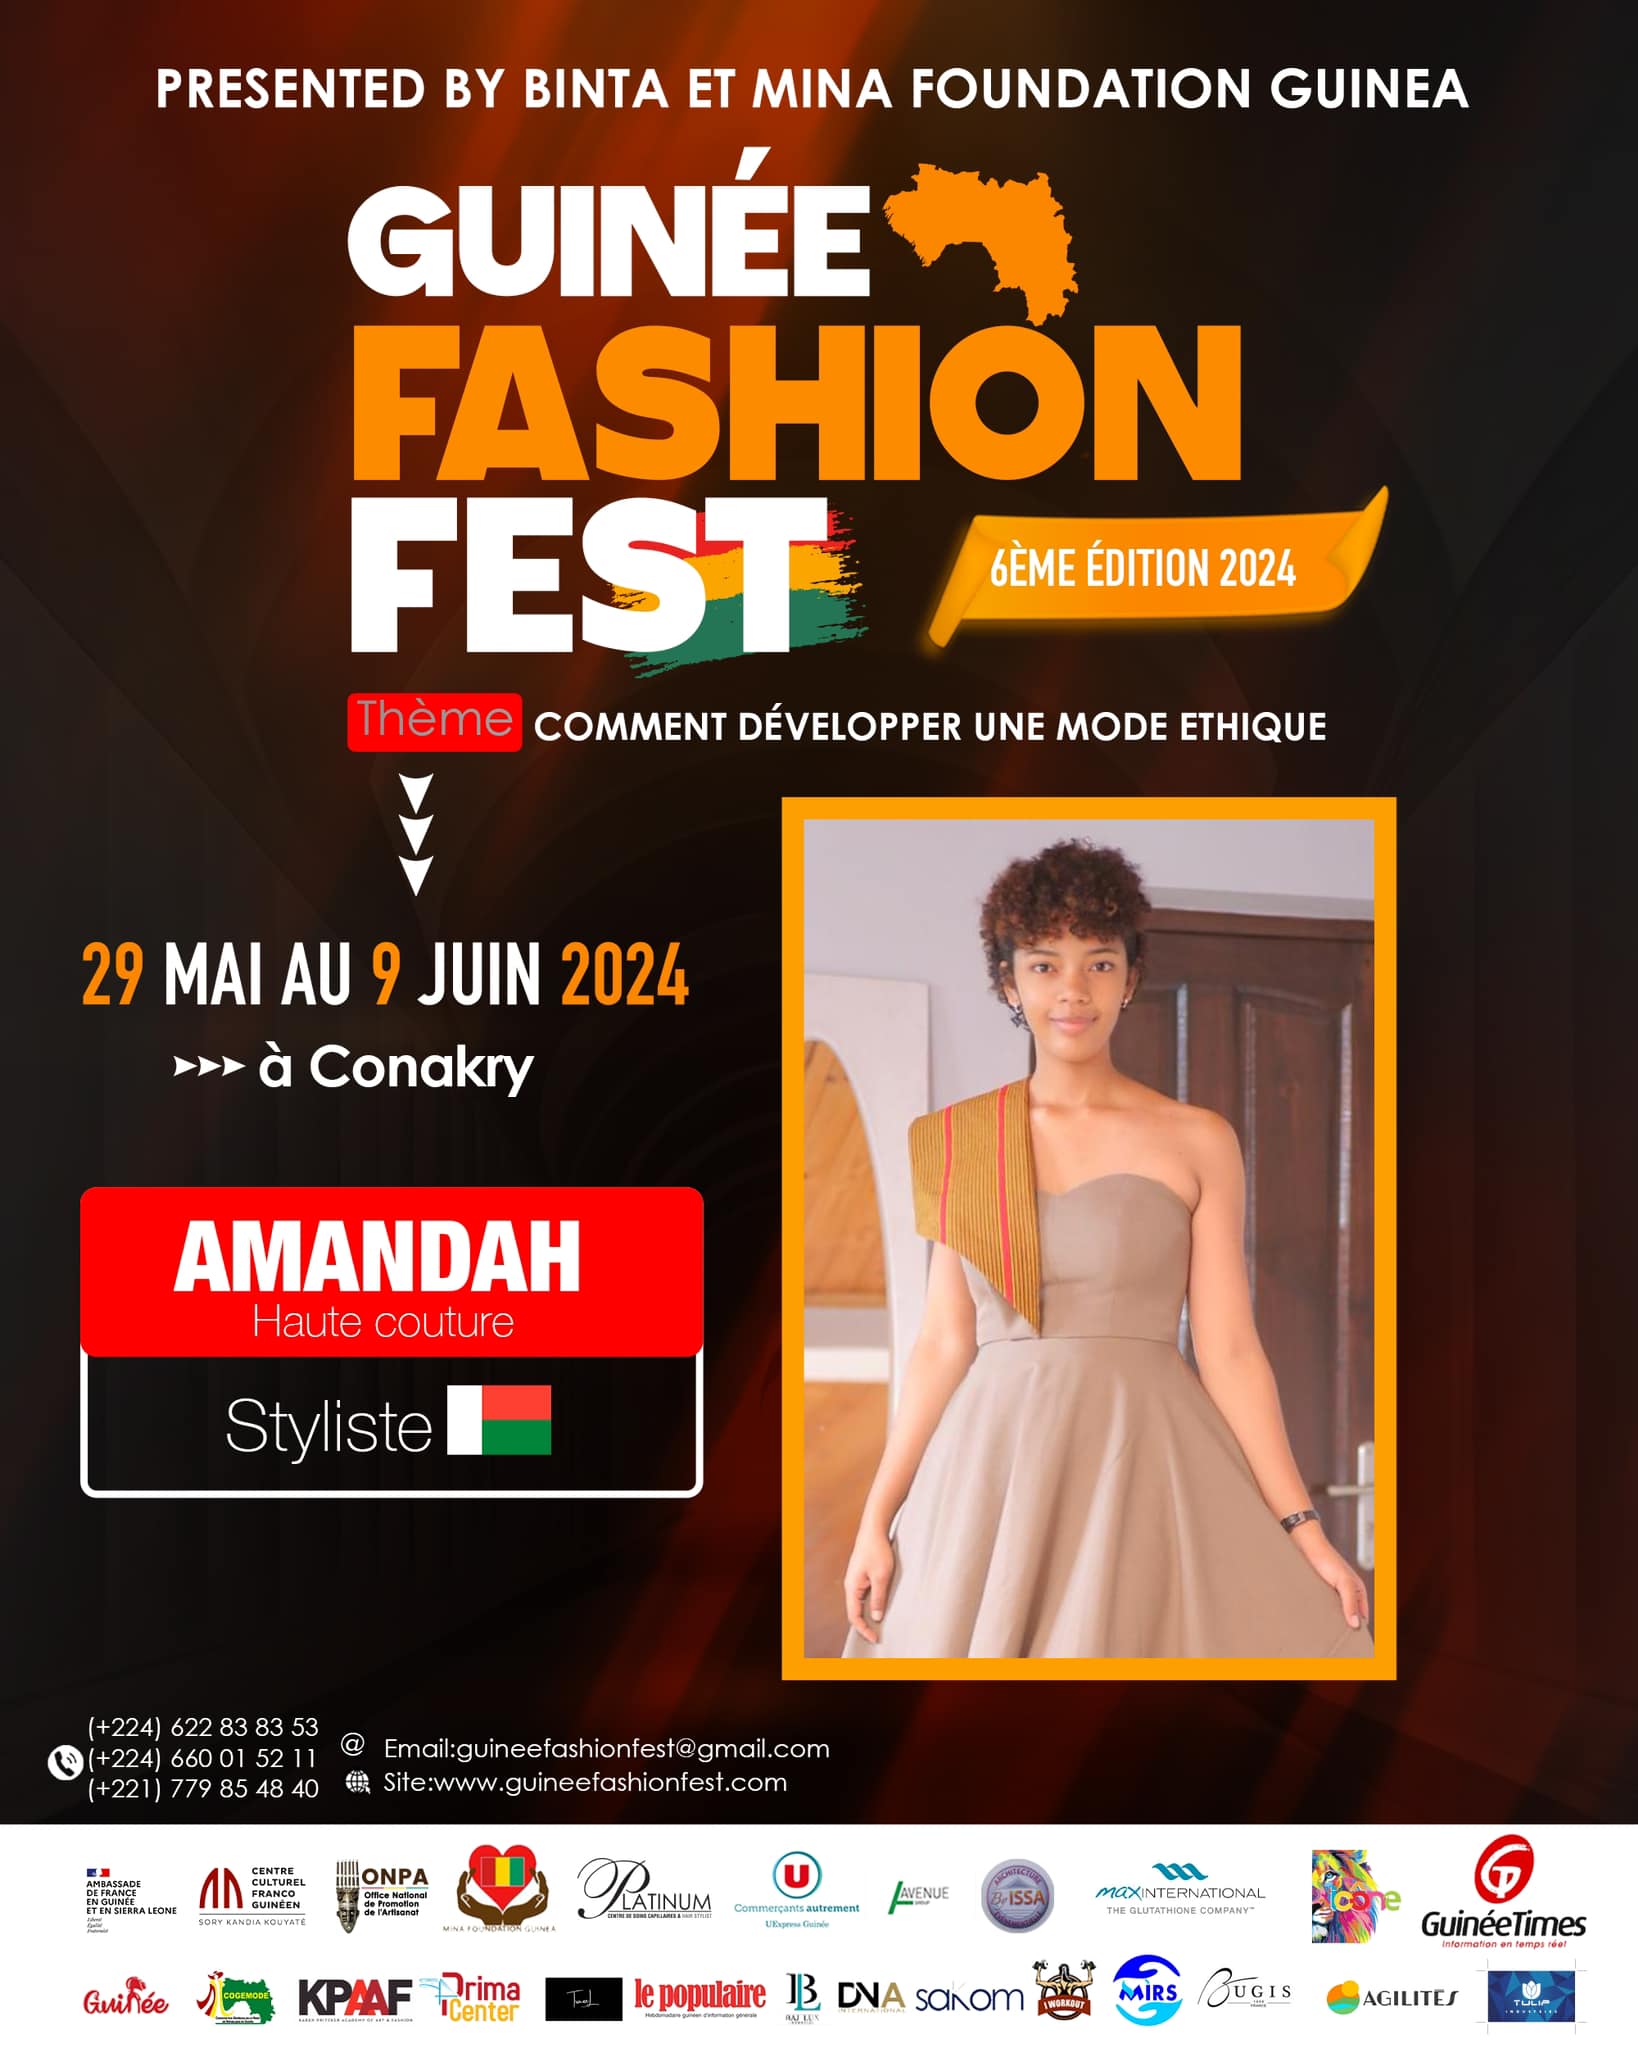 GUINEE FASHION FEST - AMANDAH FROM MADAGASCAR